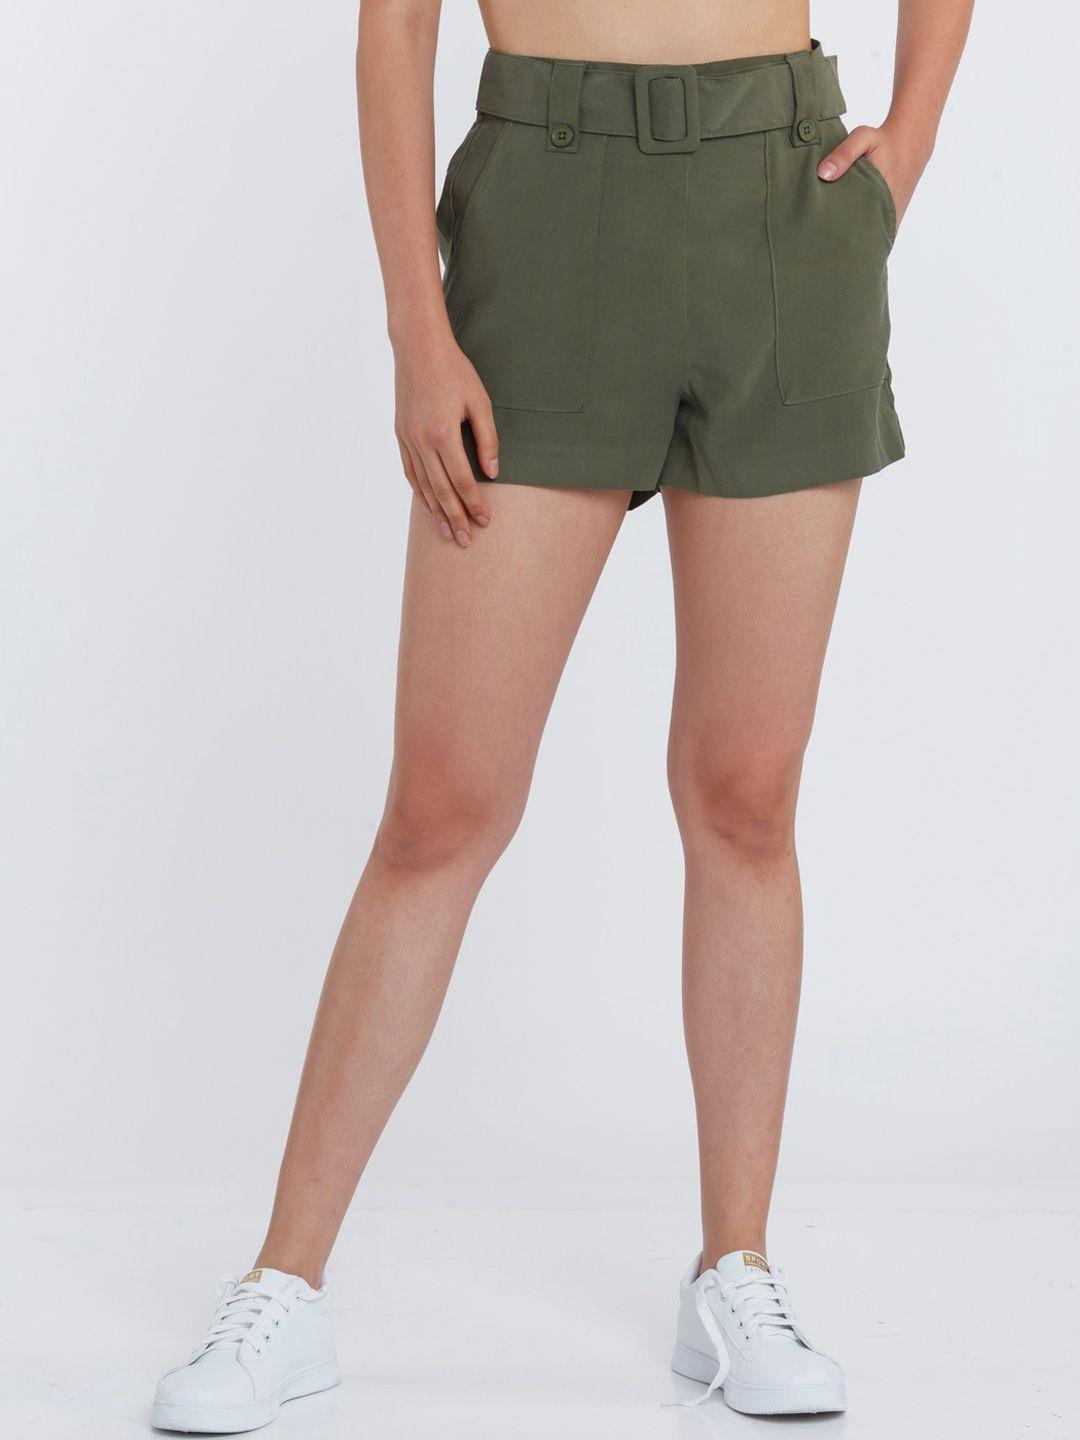 zink london women green slim fit high-rise shorts